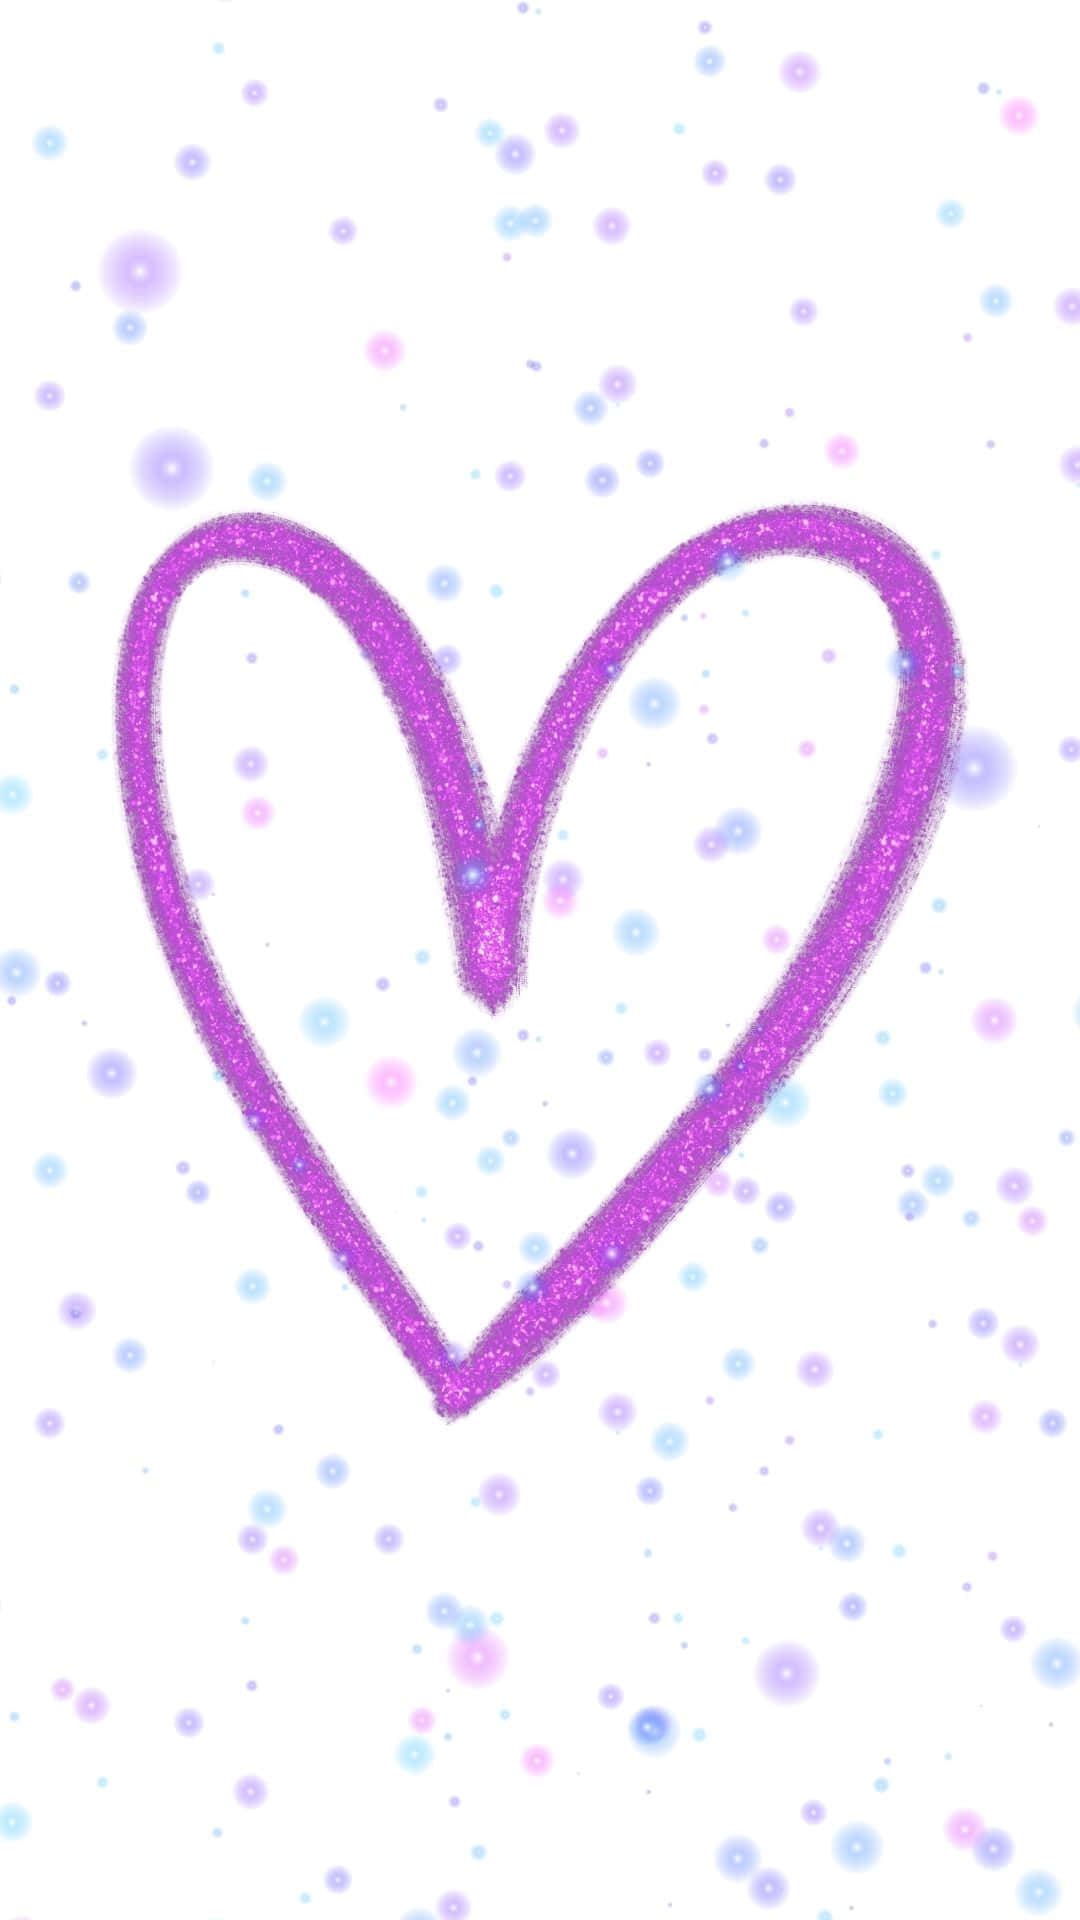 The Purple Heart - A Symbol of Service and Sacrifice